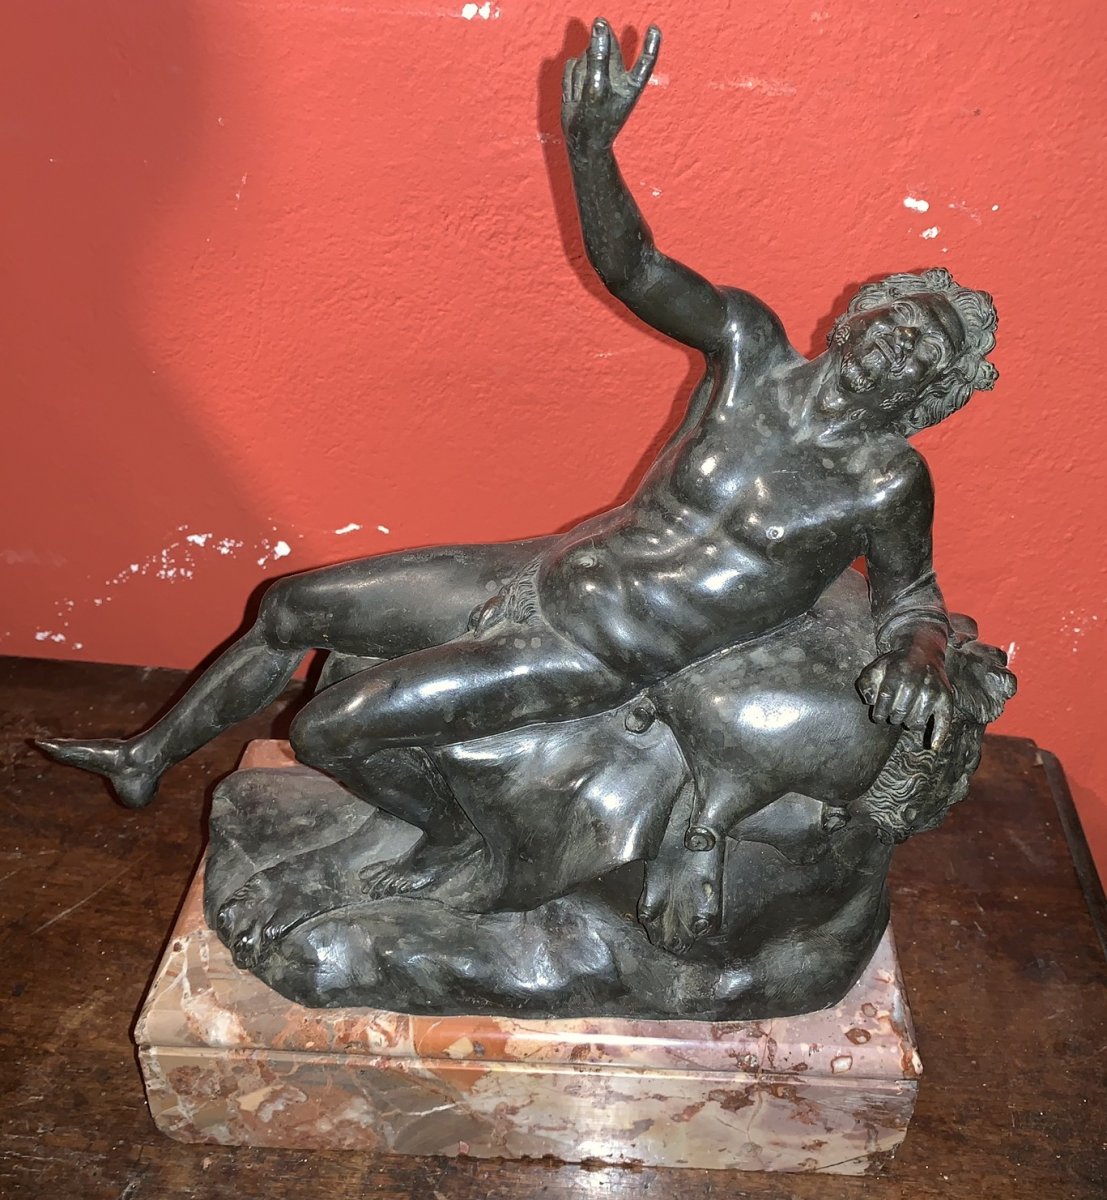 Statue De Satyre En Bronze.  Fin XVIII Siècle